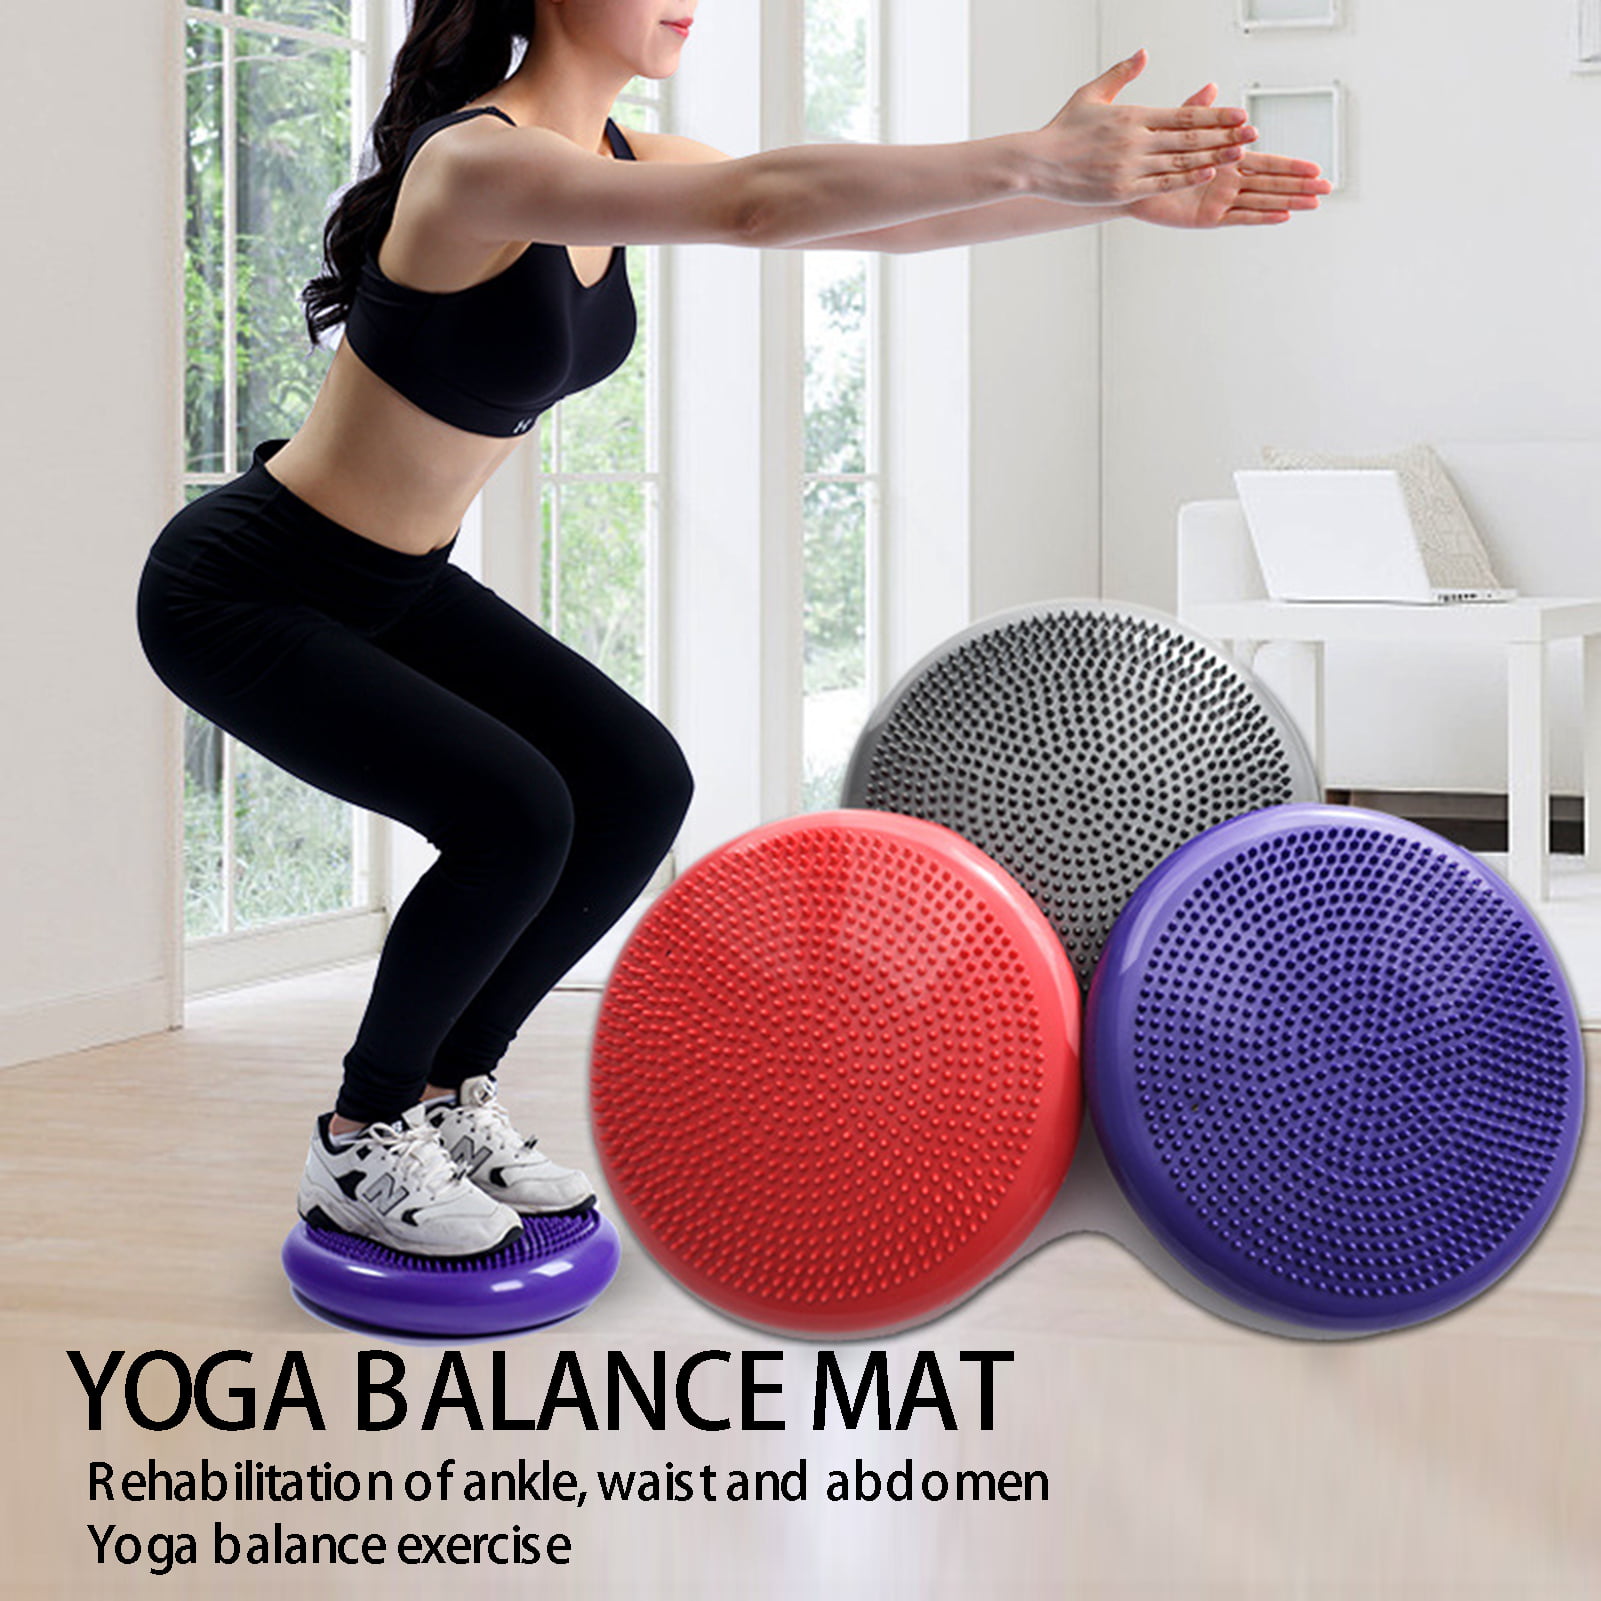 33cm Yoga Balance Board Disc Fitness Stability Cushion Gym Workout Wobble